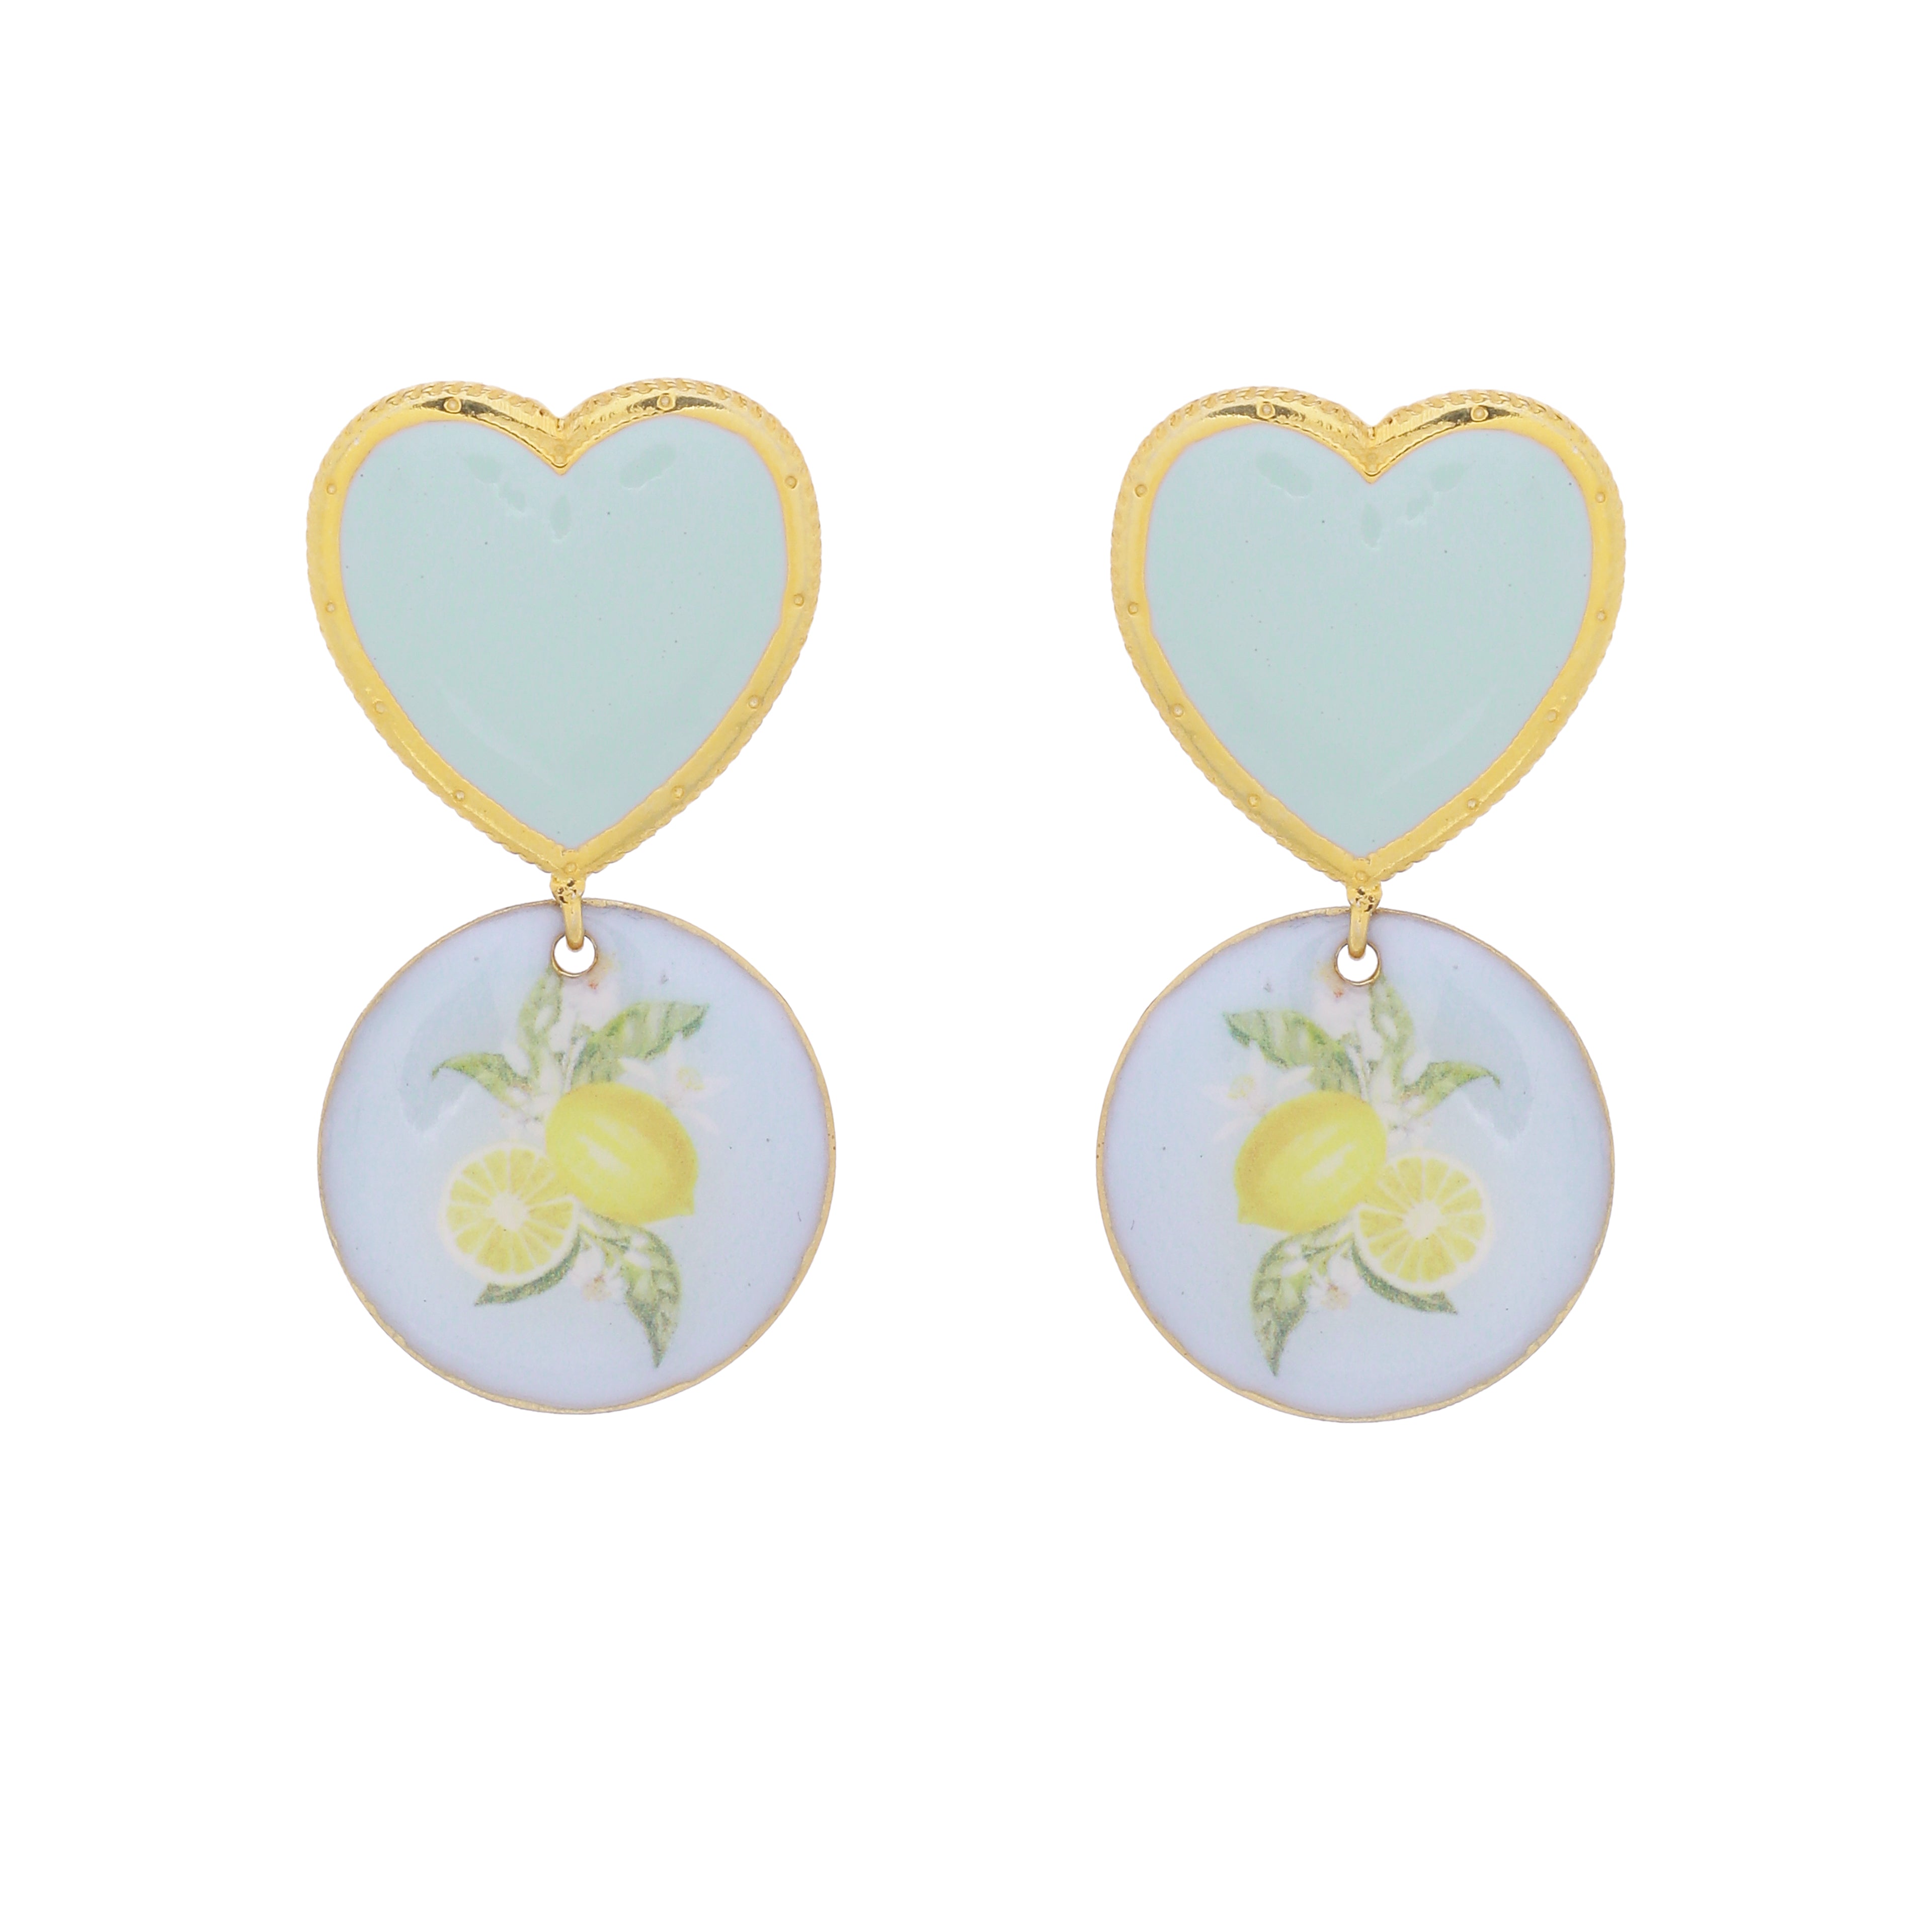 Lime heart earrings